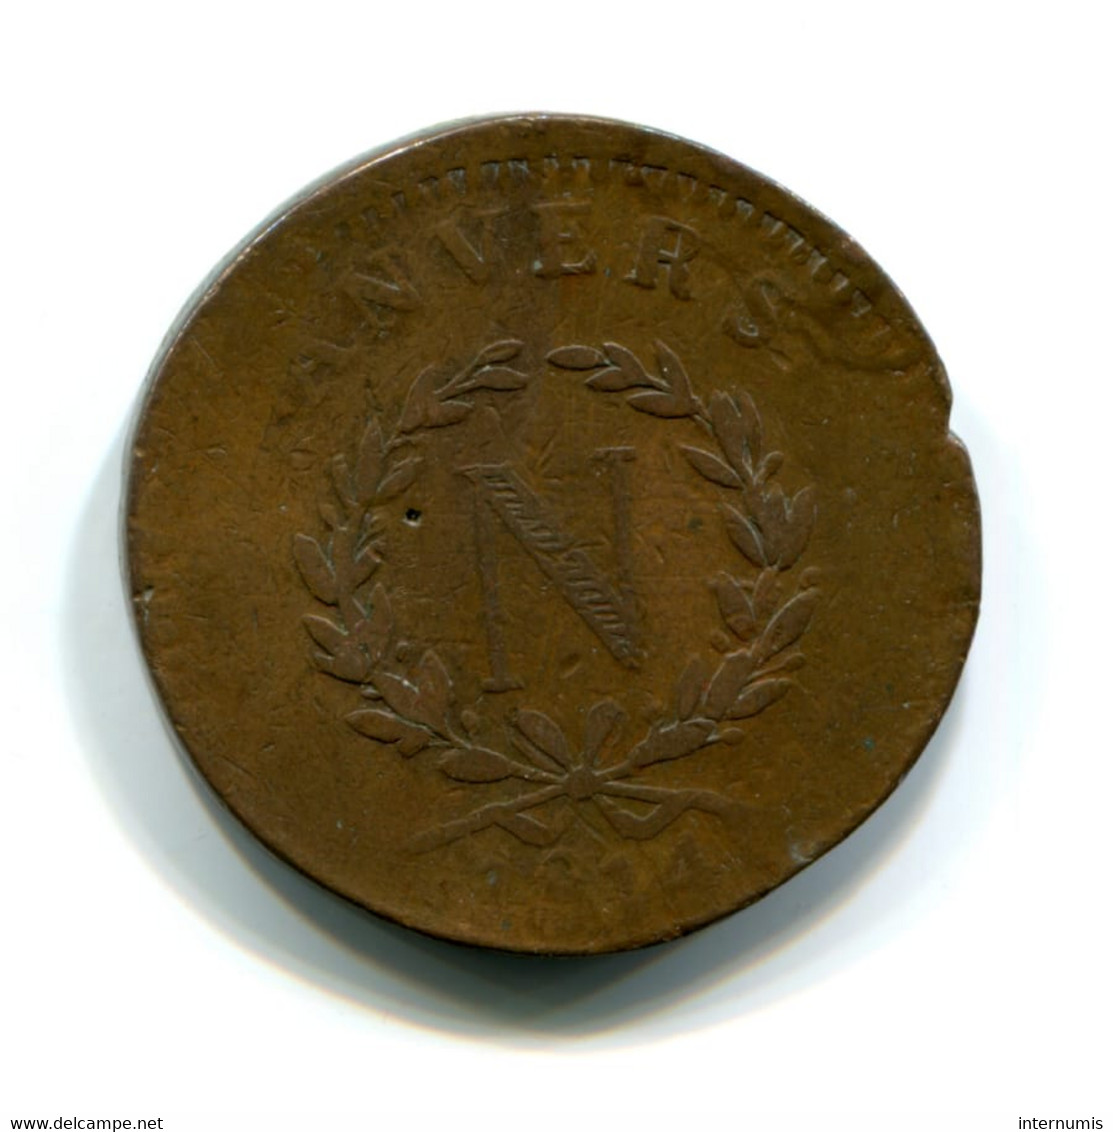 Belgique / Belgium, 10 Centimes, 1814, Siege D'Anvers- Napoléon,Bronze, WOLSCHOT,TB(VF),KM#5,F.130A/2,G.191a,COL.2b - 1814 Siege Of Antwerp